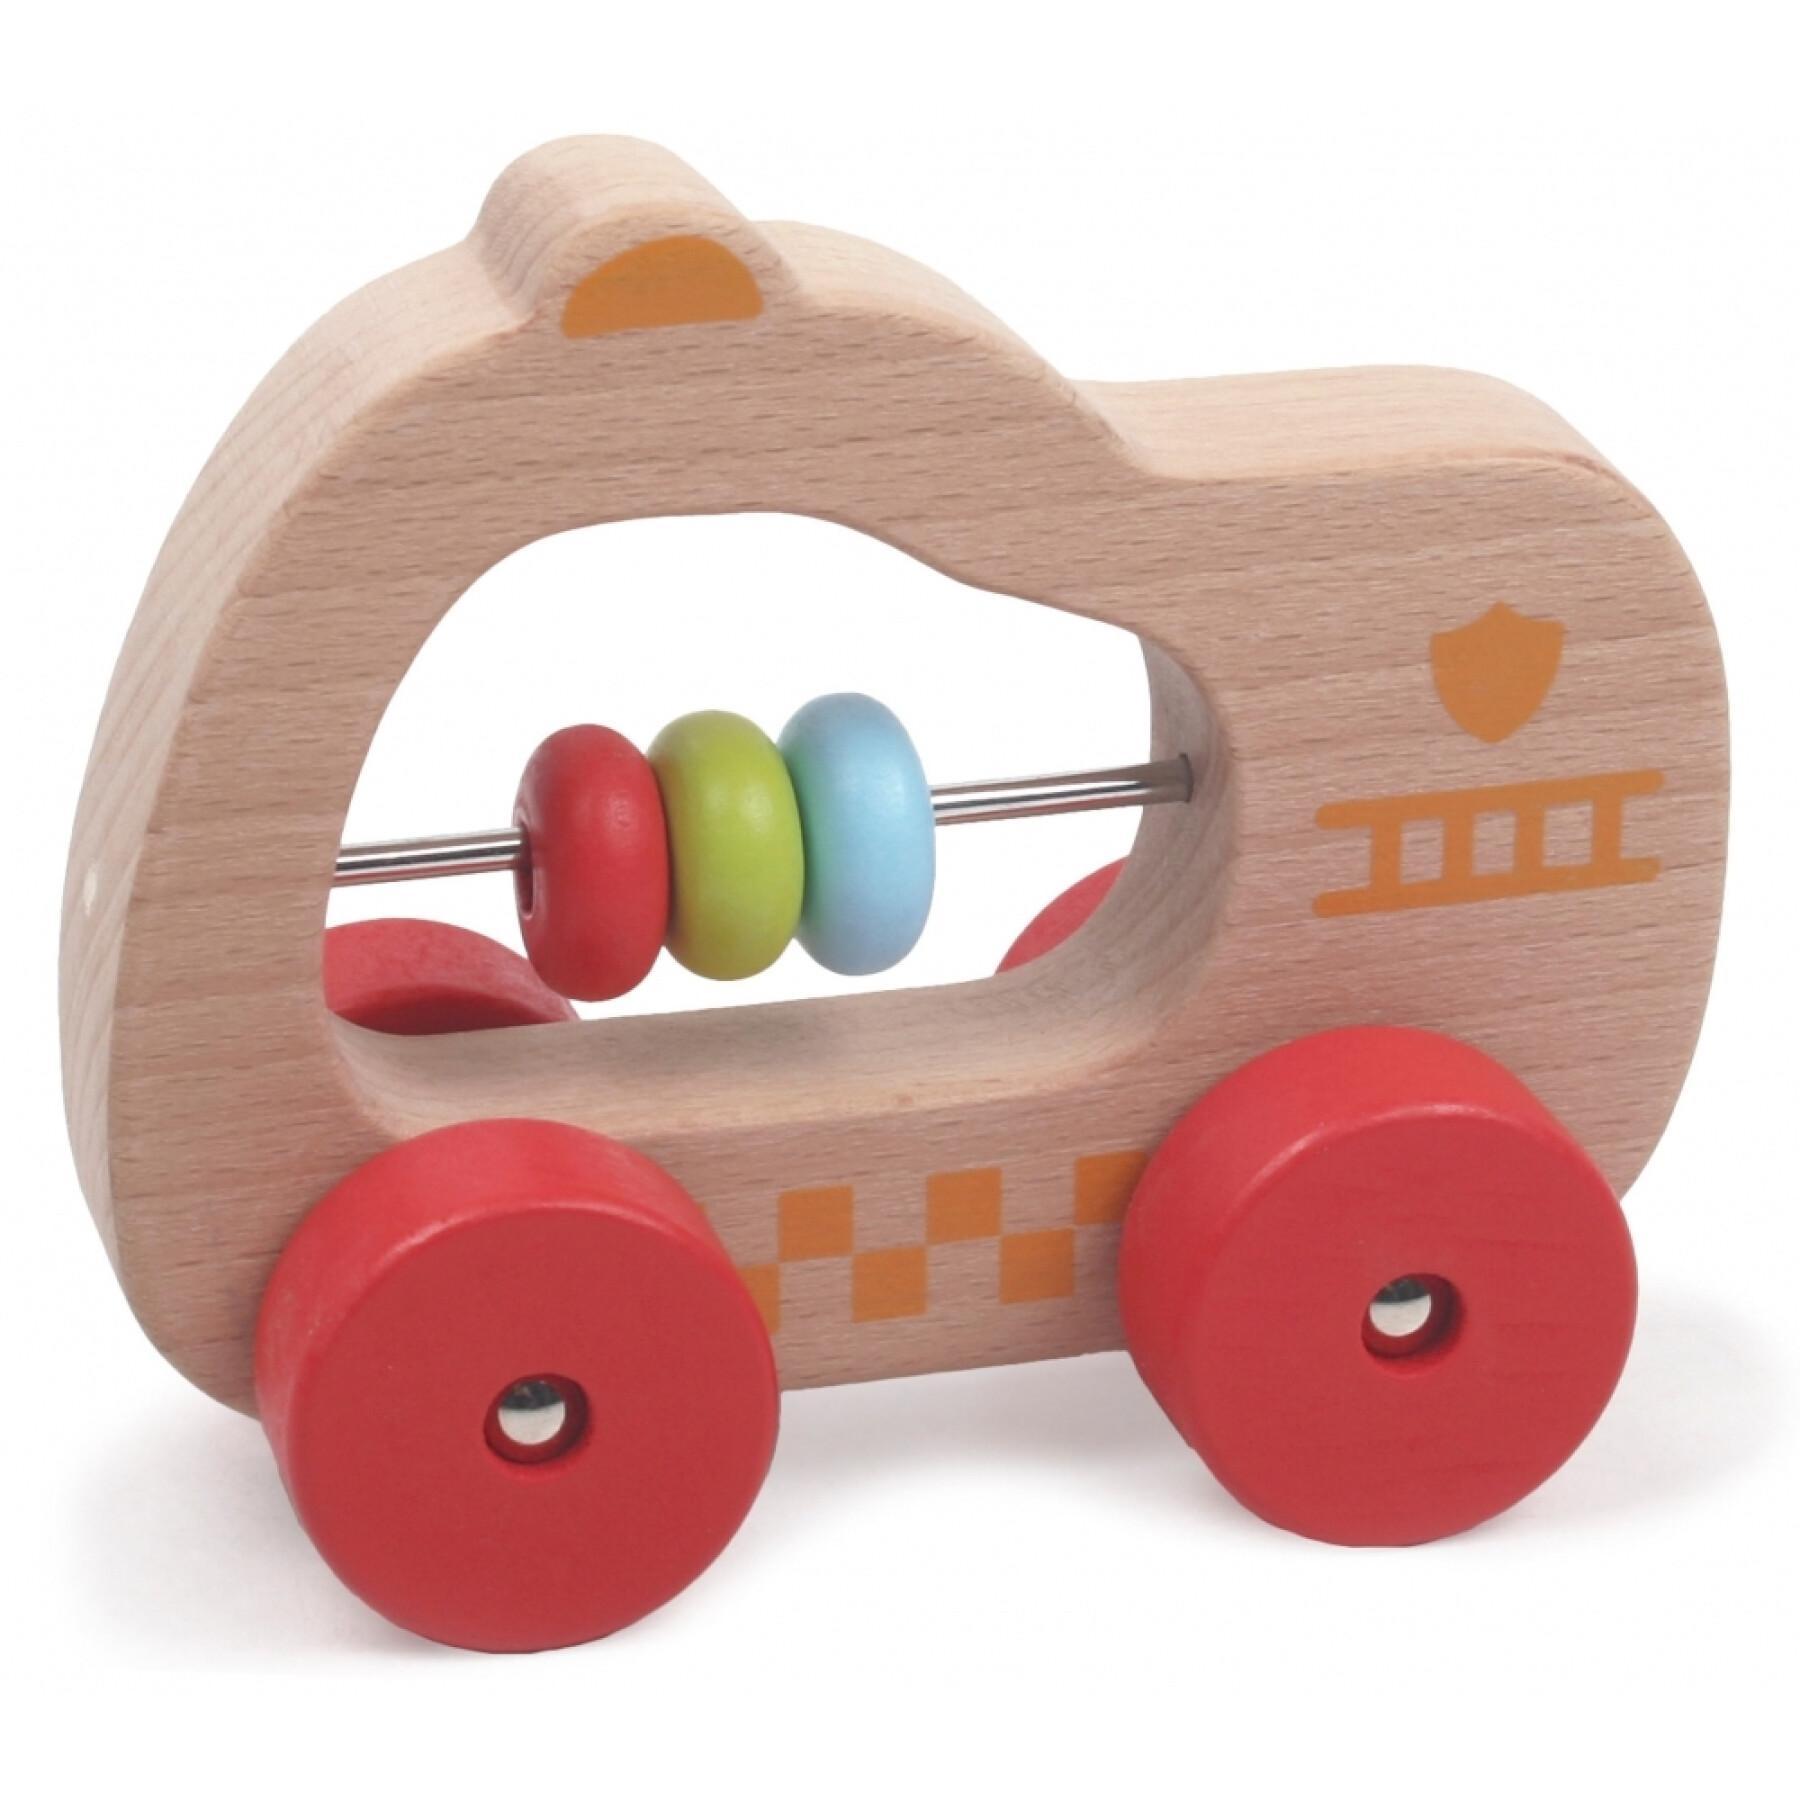 Wooden abacus activity car Fantastiko